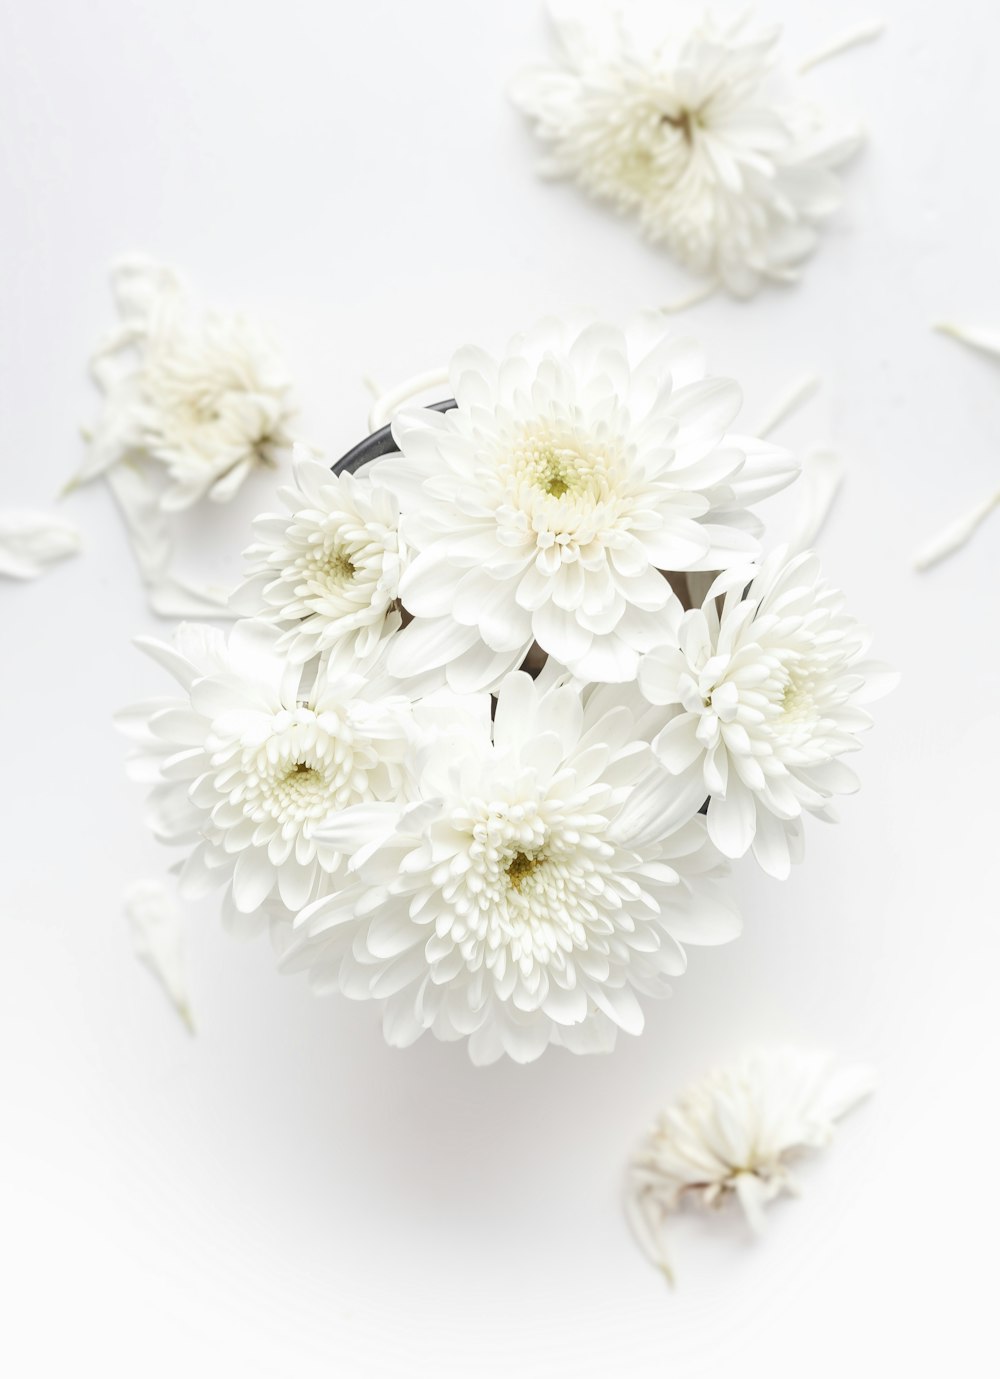 fiore dai petali bianchi su sfondo bianco